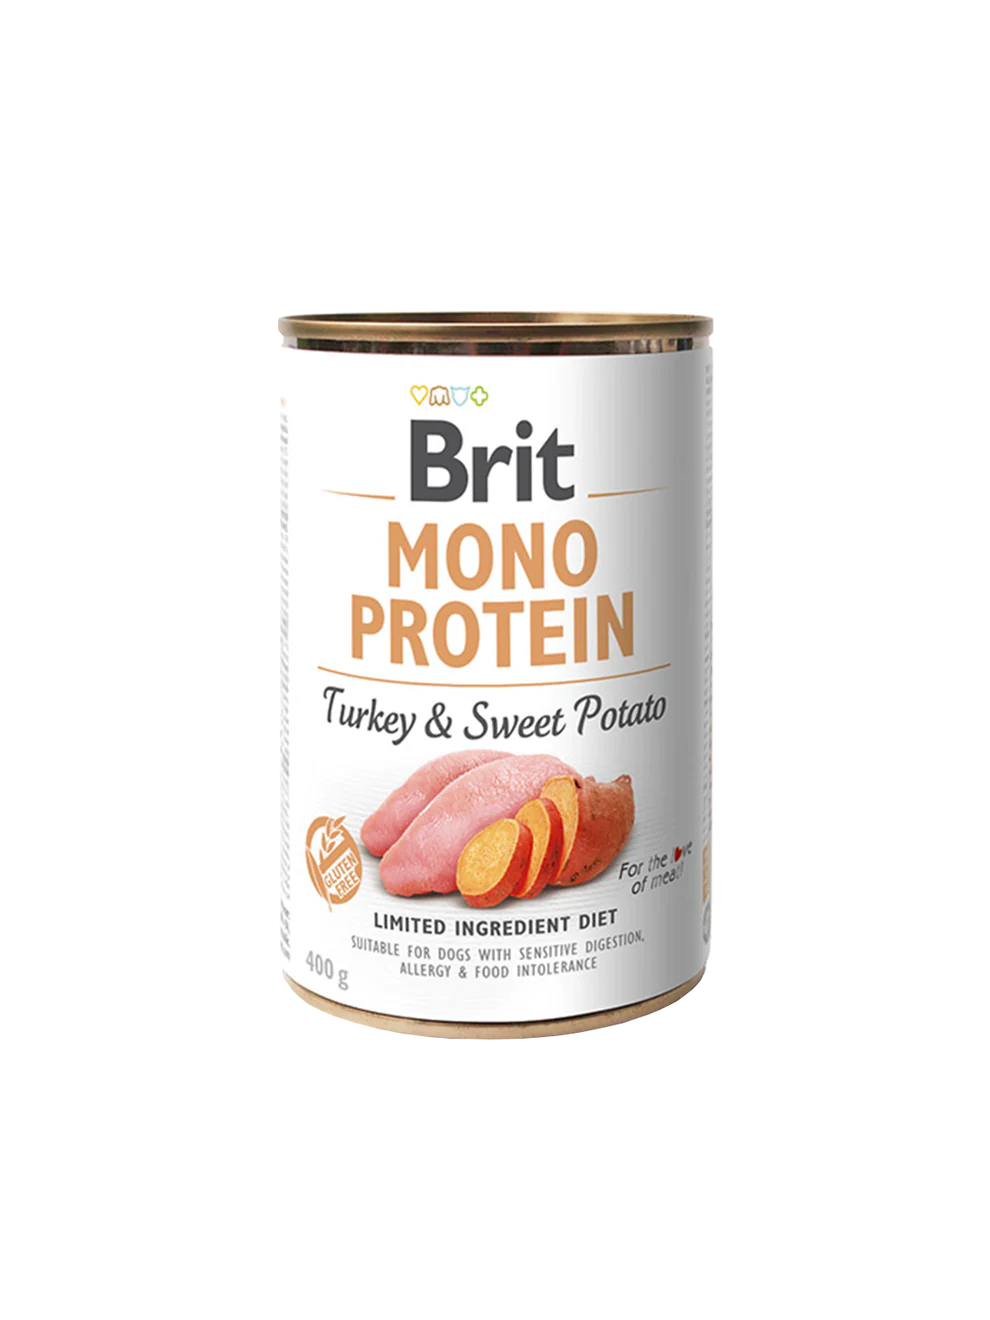 Brit Mono Protein Turkey & Sweet Potato 6 pack of 400g